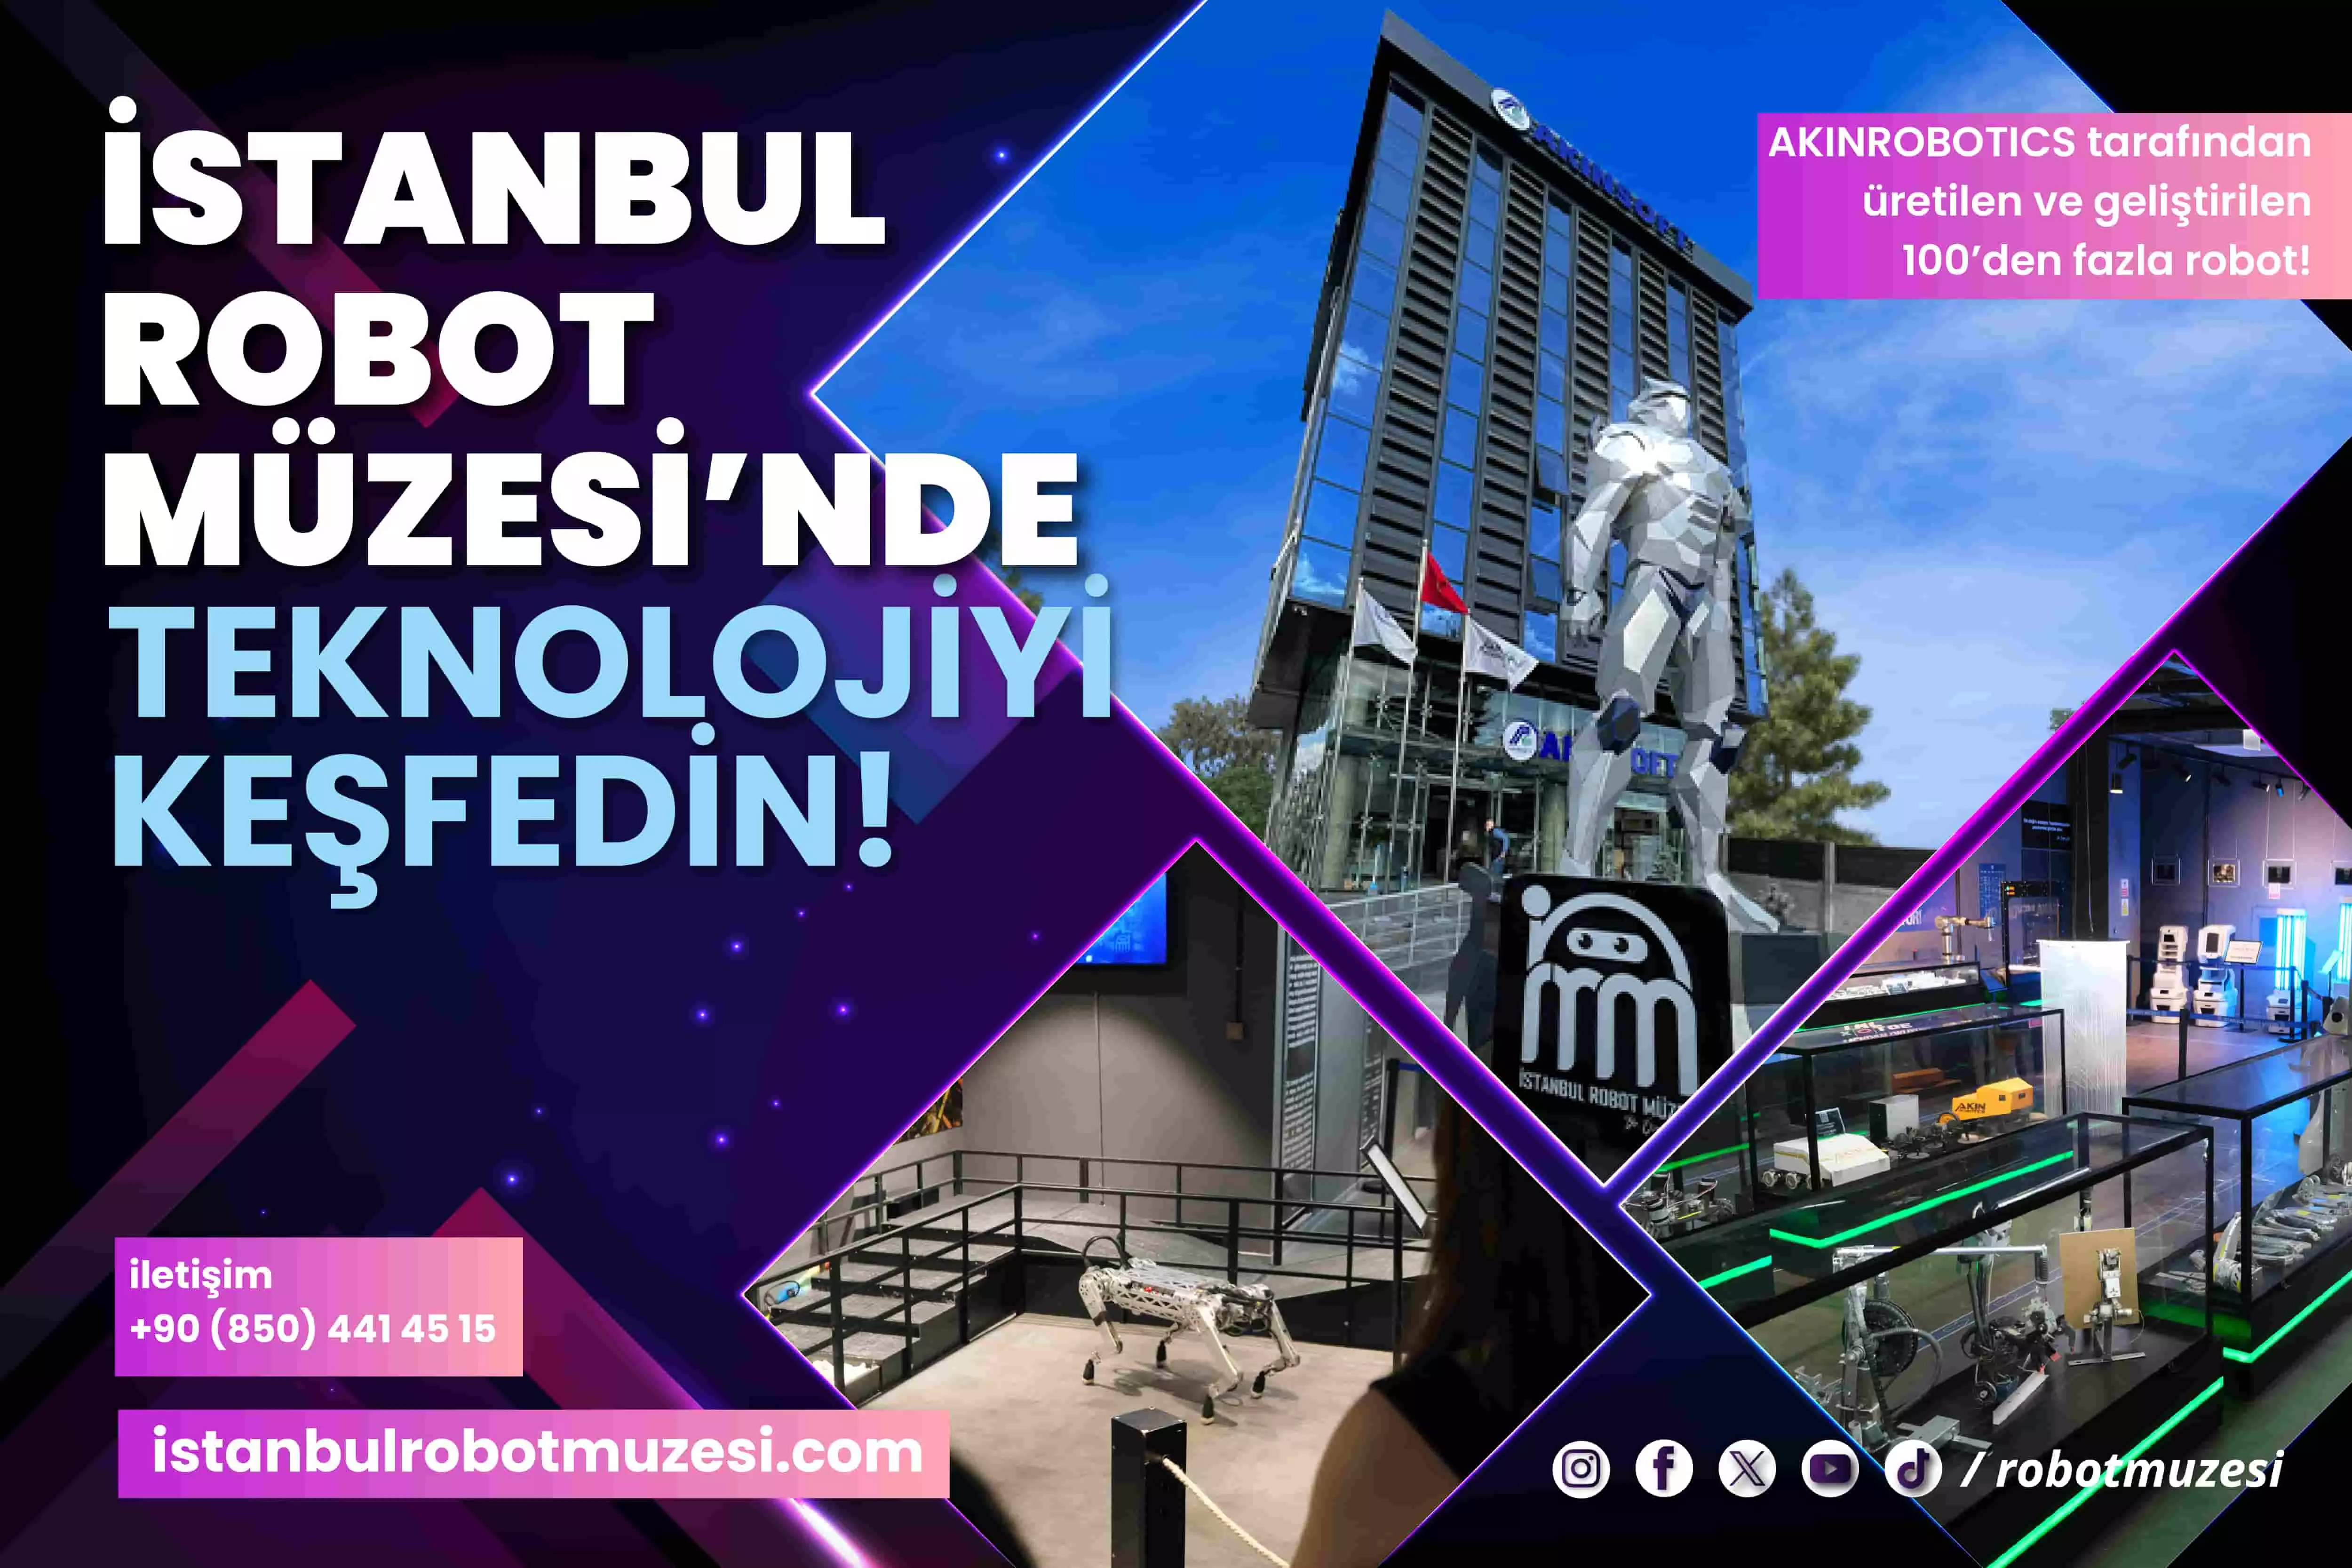 Museo del Robot de Estambul billete - 1